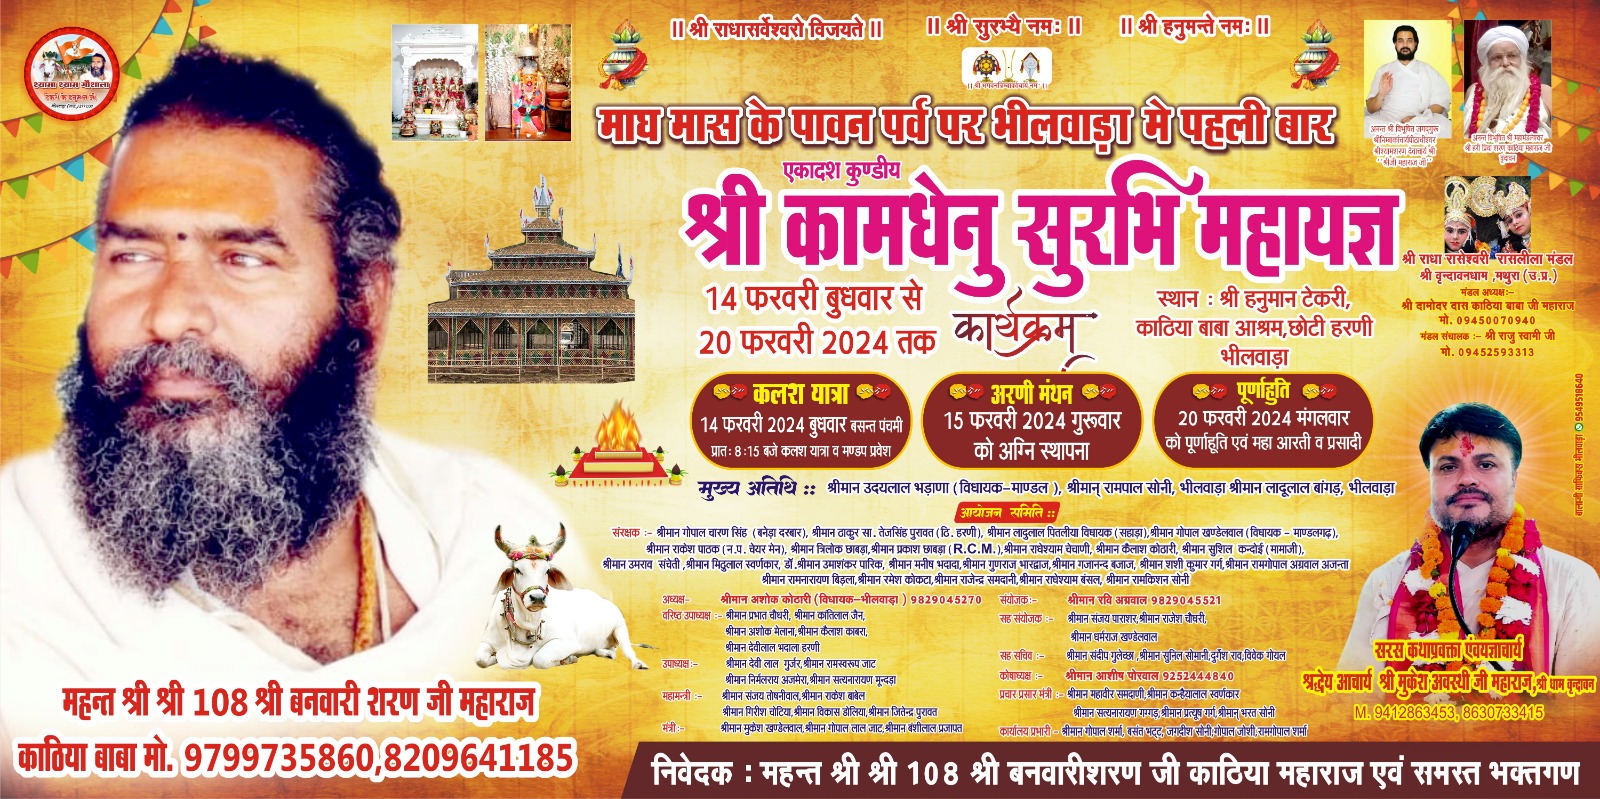 Grand Shri Kamadhenu Surbhi Mahayajna to Debut in Bhilwara During Magh Month